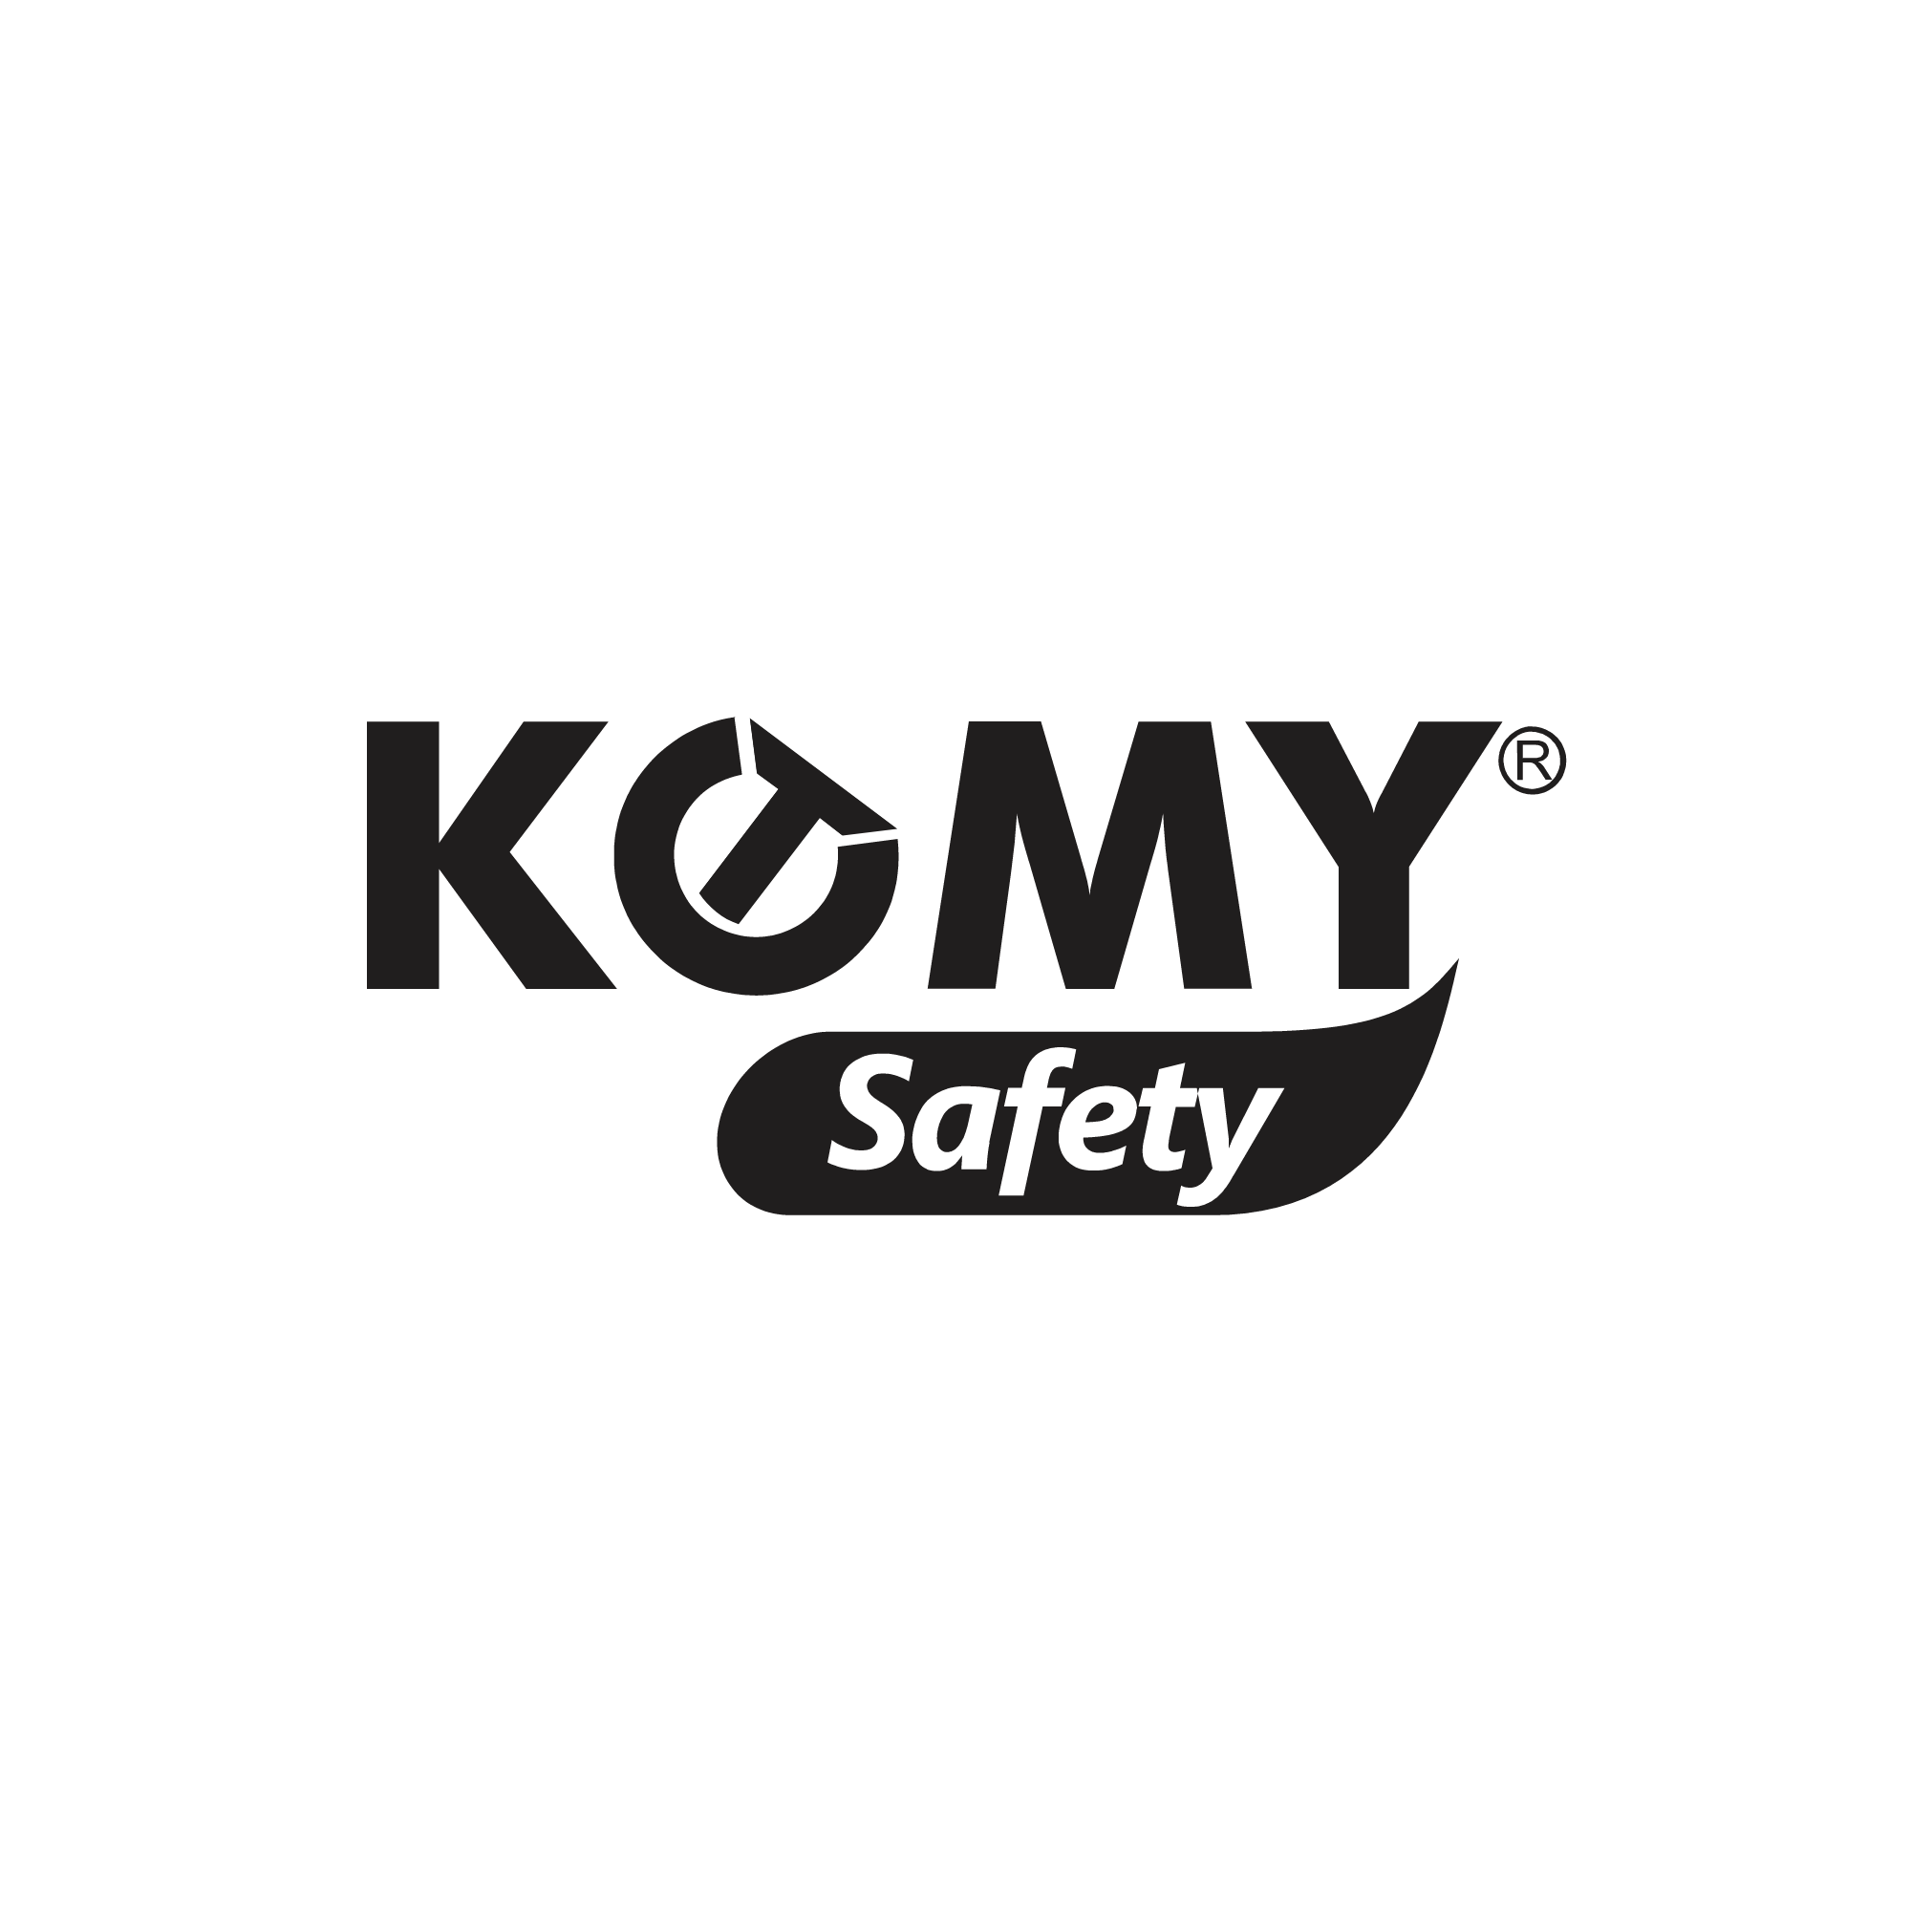 komy_safety.png